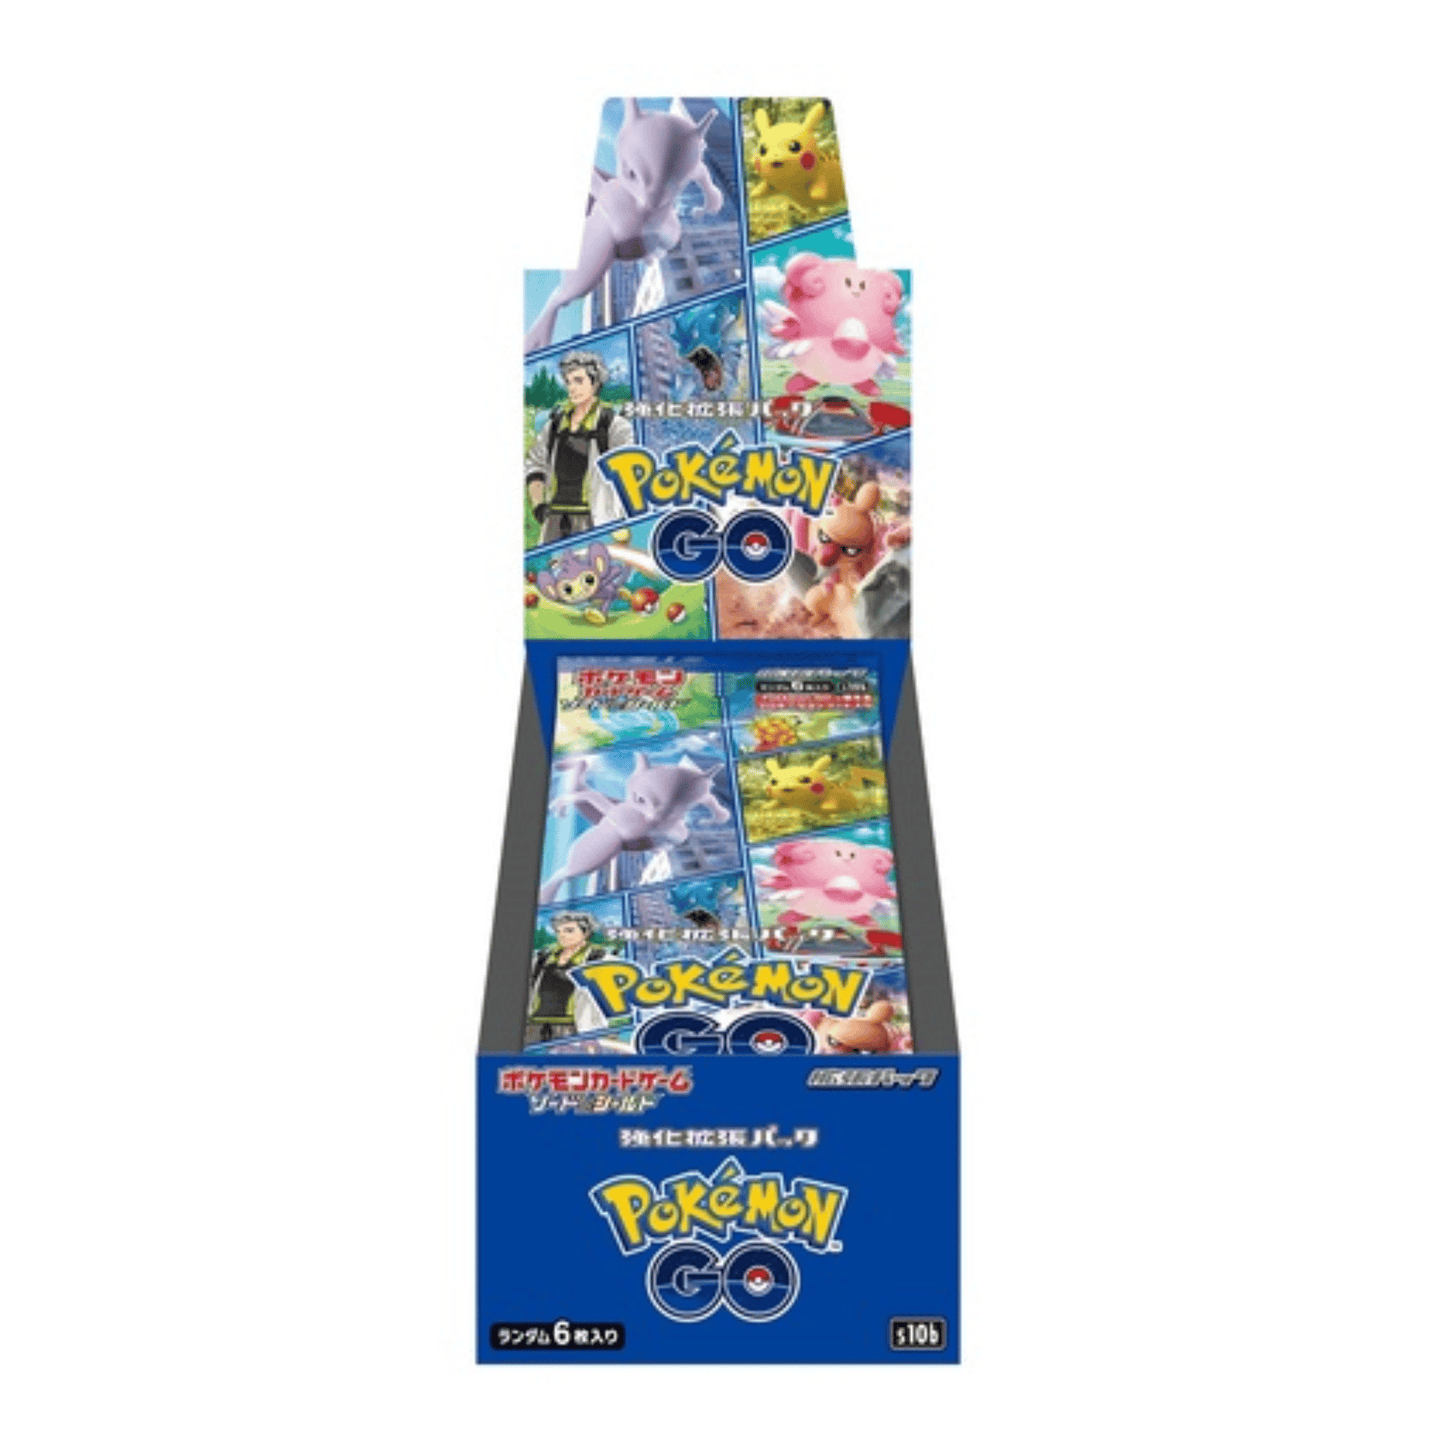 Pokémon Go s10b | Buste / Espositore